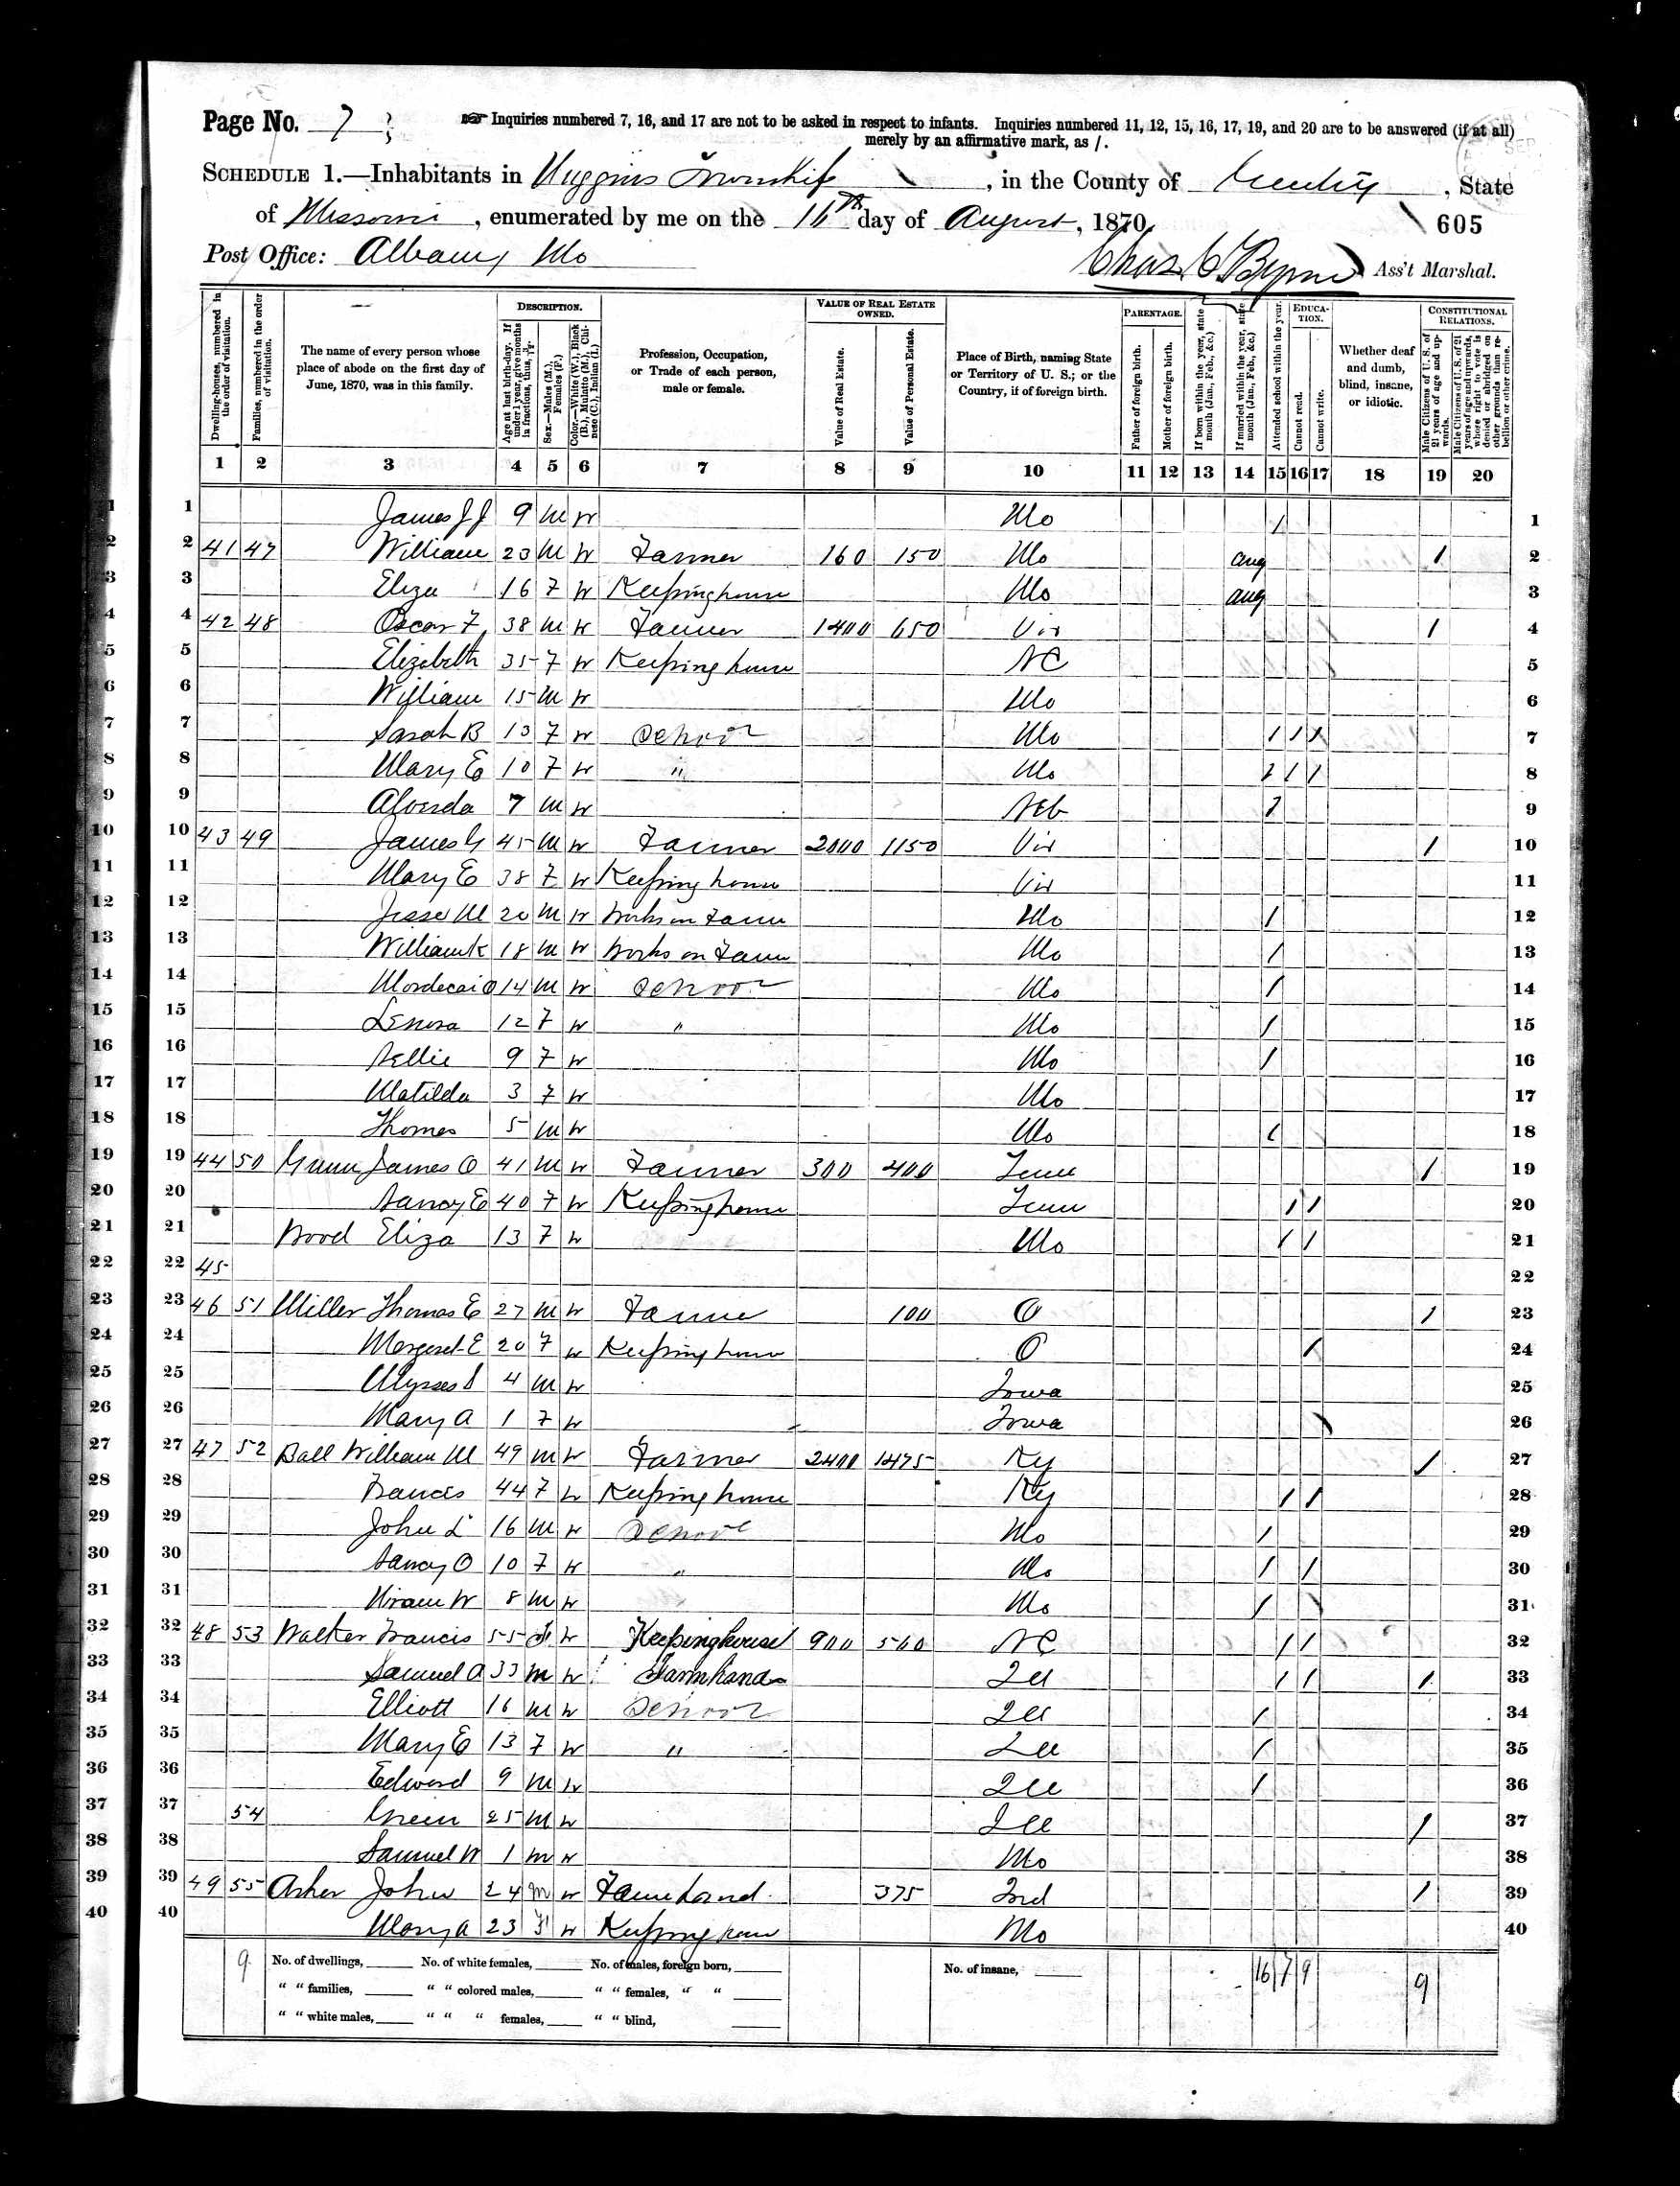 Frances (Best) Walker, widow of Philip V. Walker, 1870 Gentry County, Missouri, census